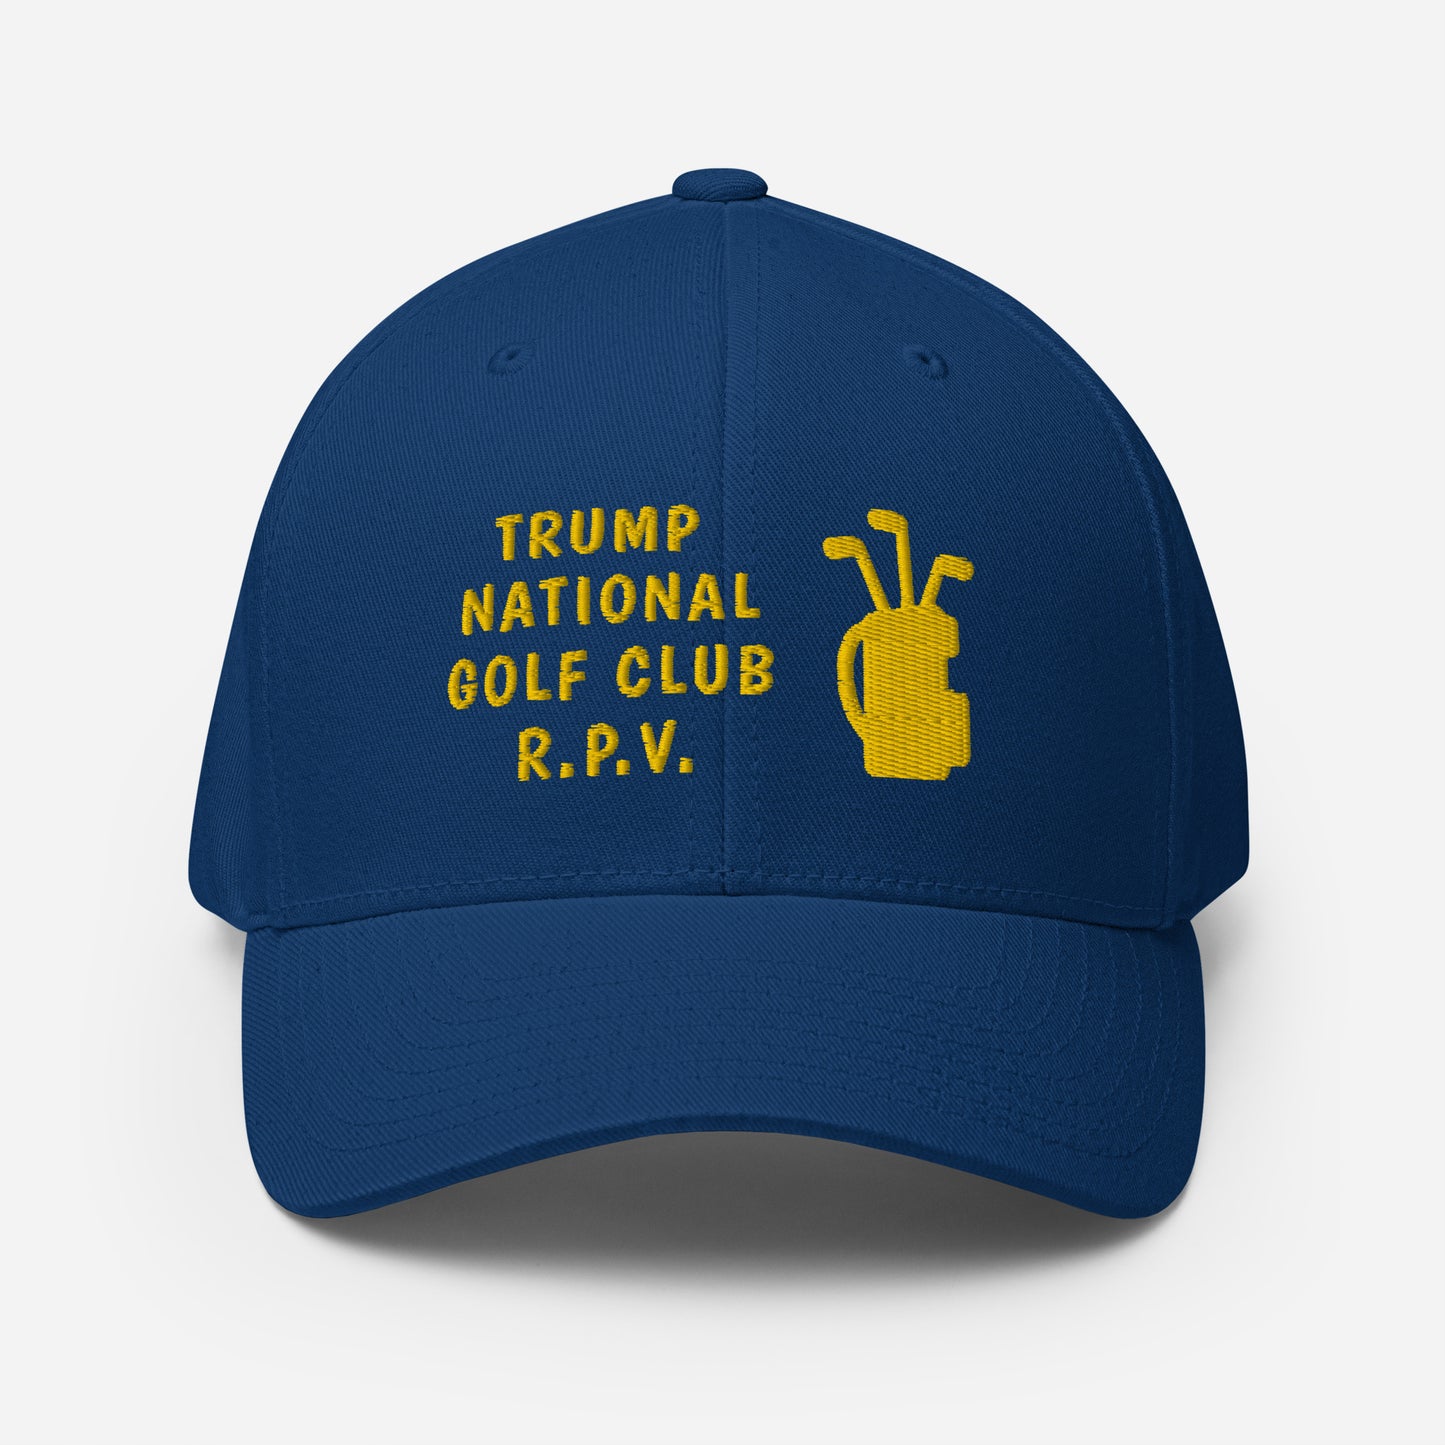 Trump National Golf Club - Rancho Palos Verdes - California - 90275 - Structured Twill Cap